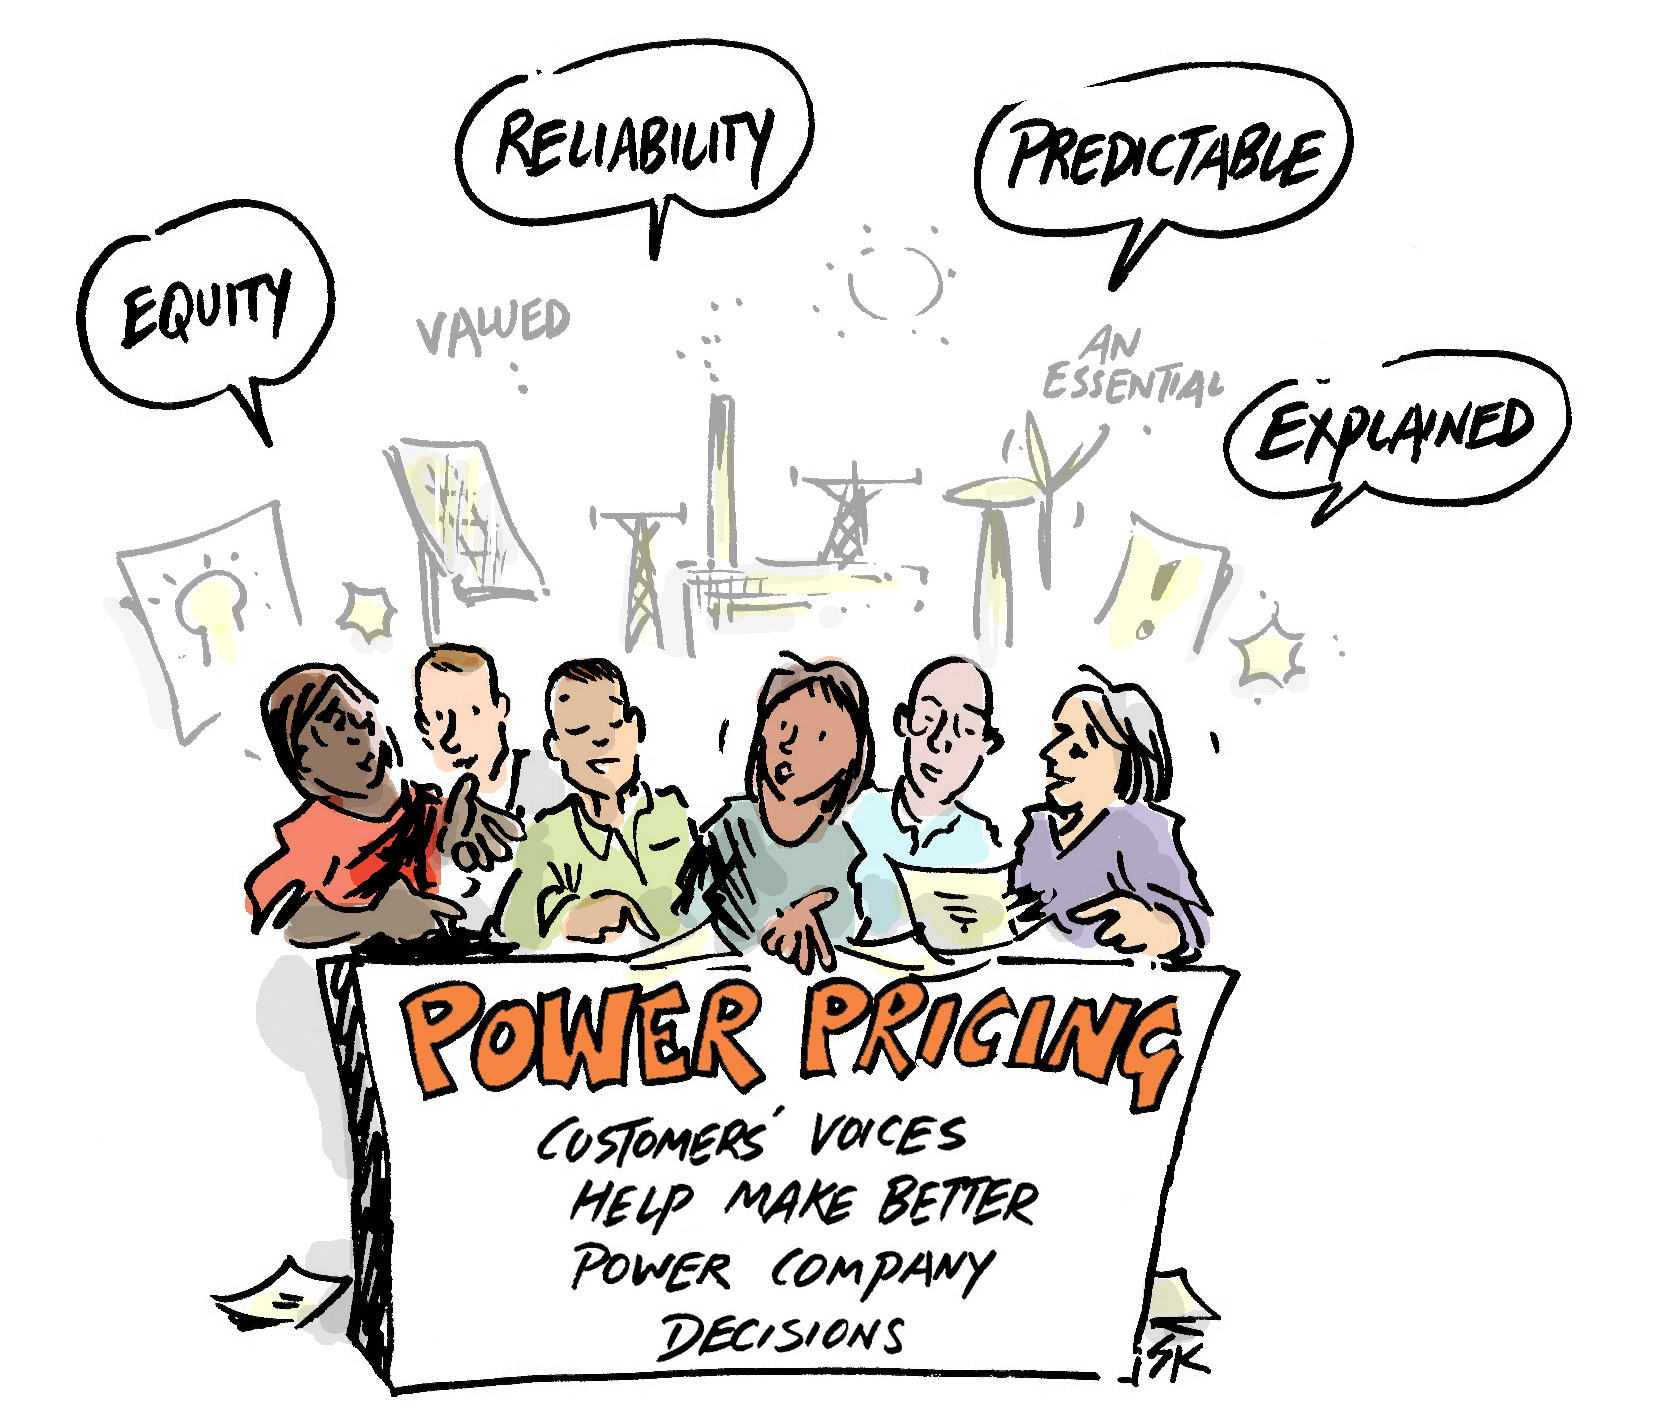 sa-power-networks-deliberative-panel-democracy-co